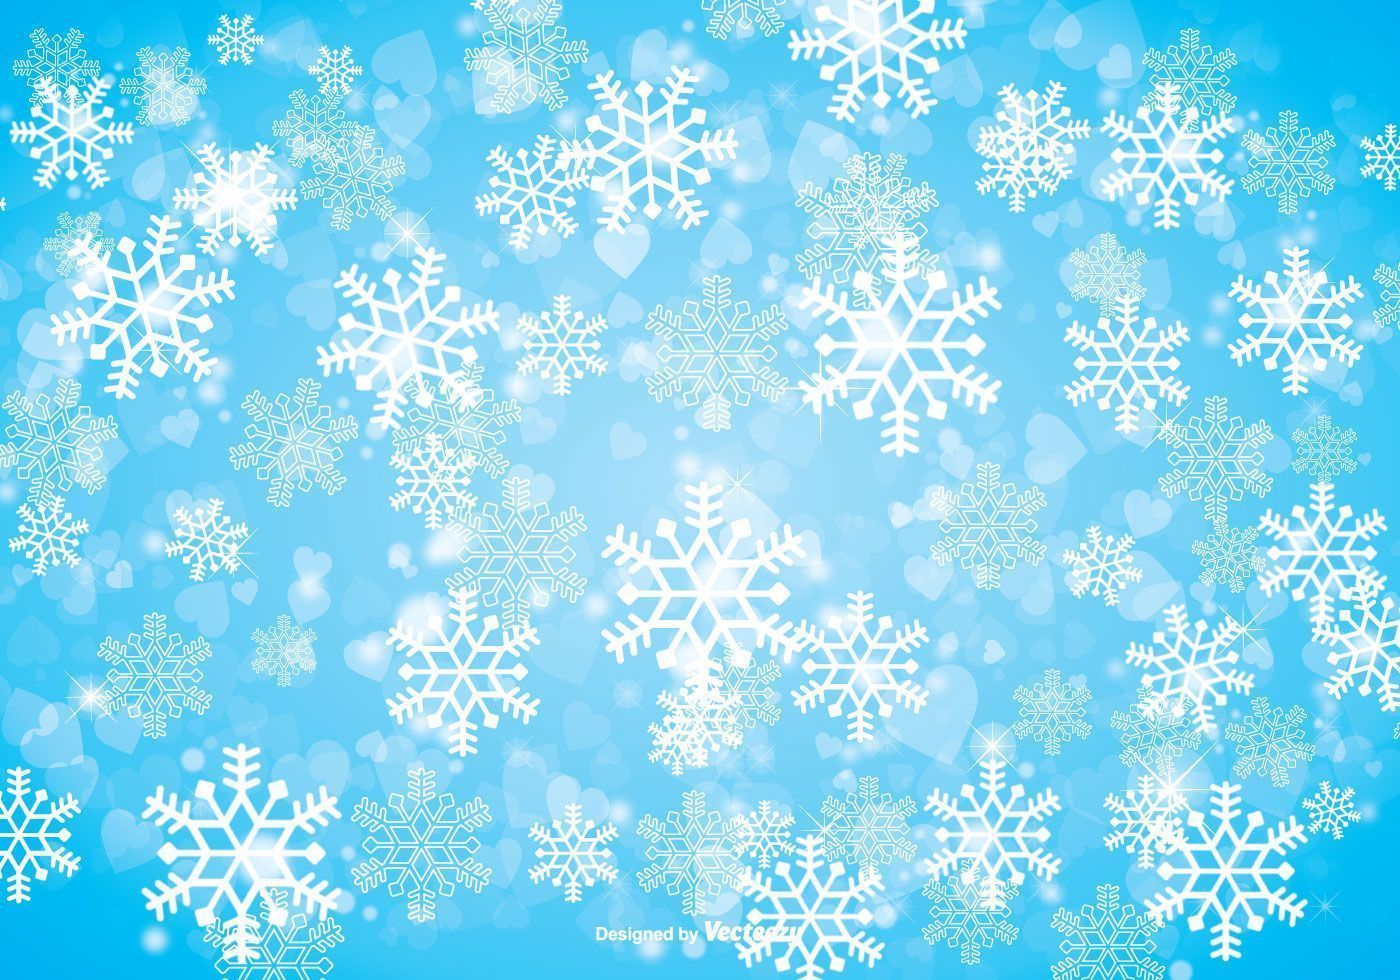 Winter Free Vector Art - 5551 Free Downloads